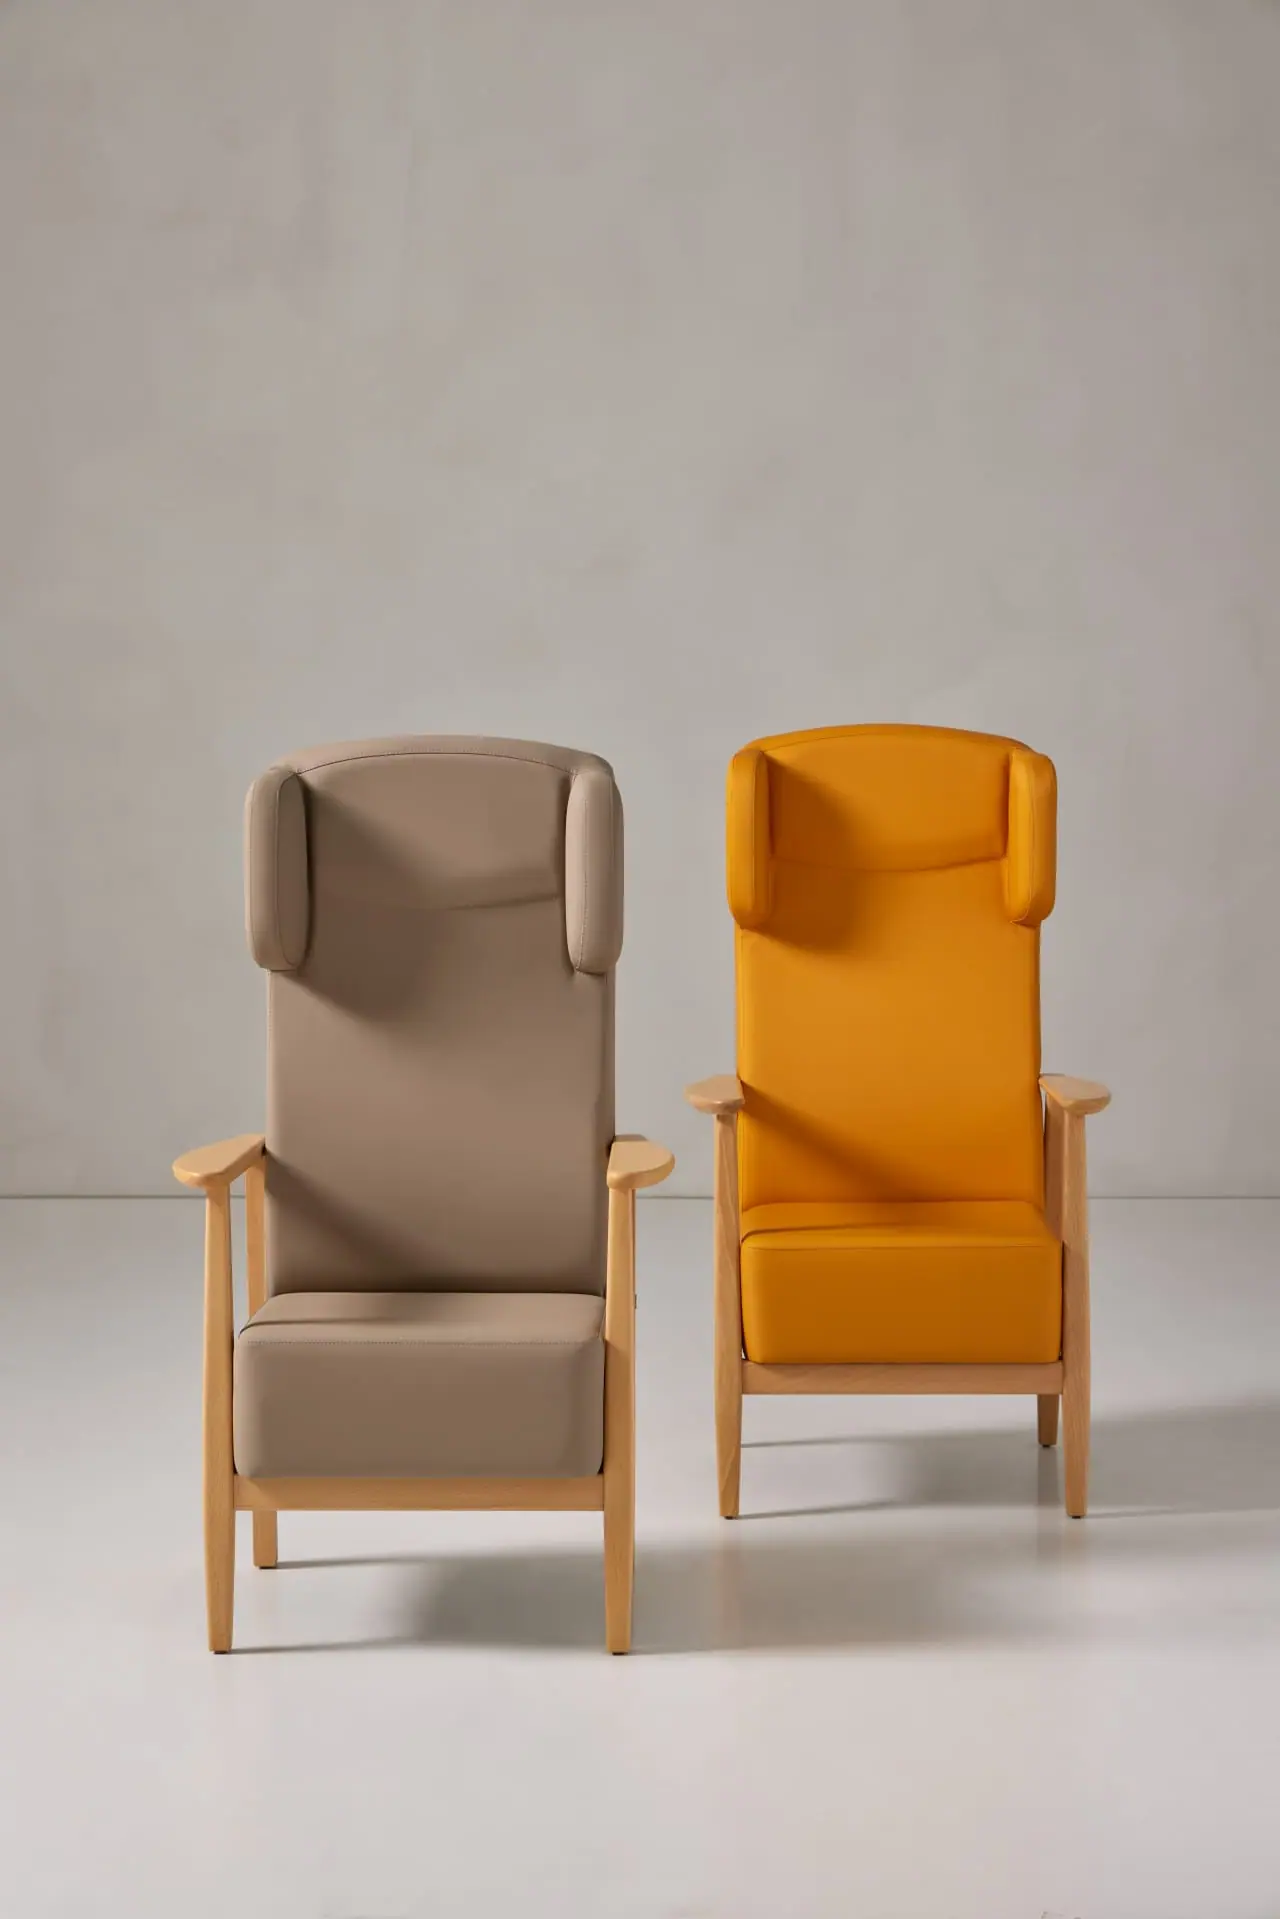 seniorcare-boreal-lounge-chairs-01